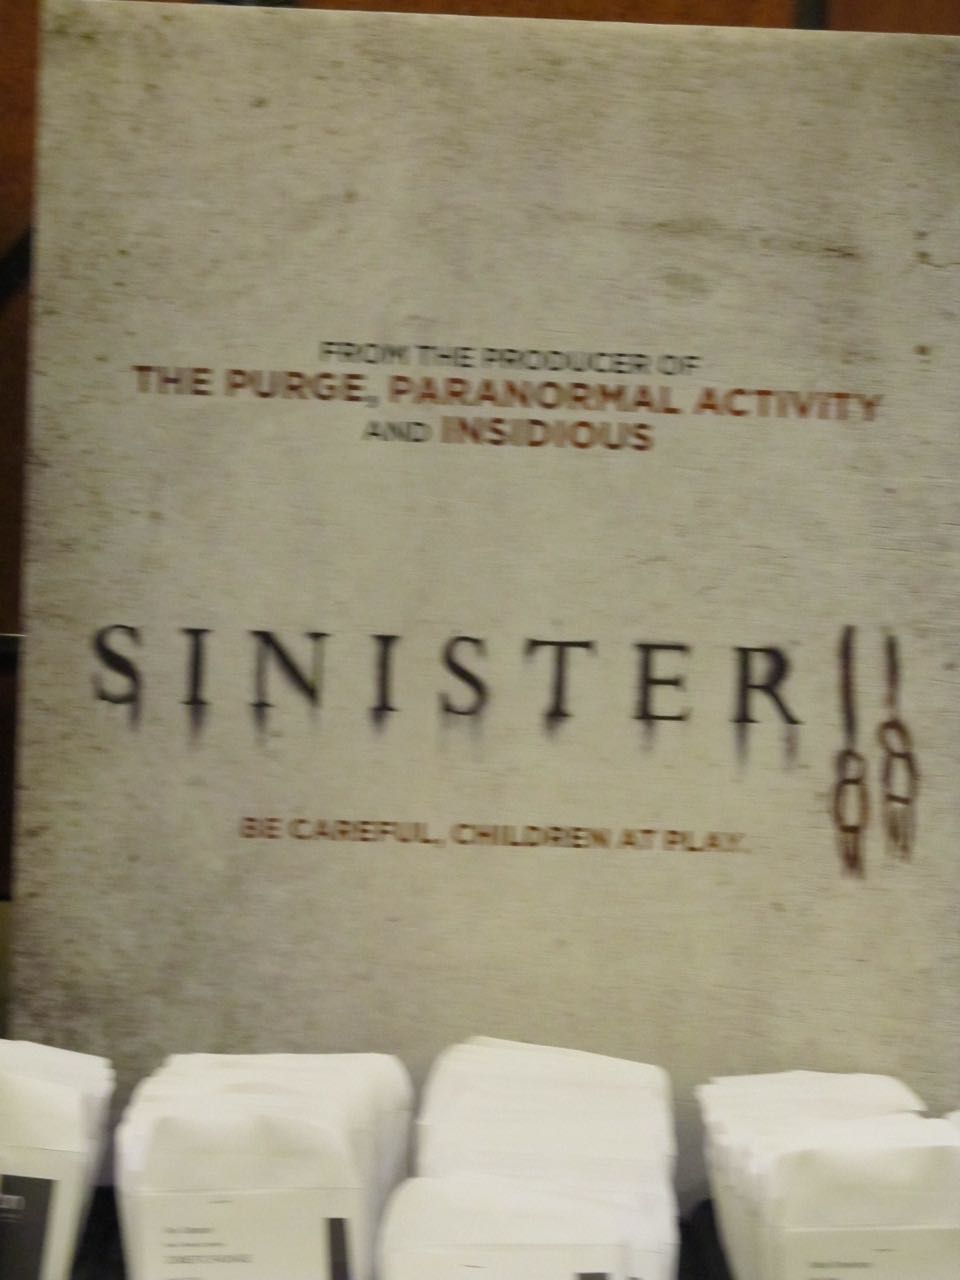 Sinister II Poster CinemaCon